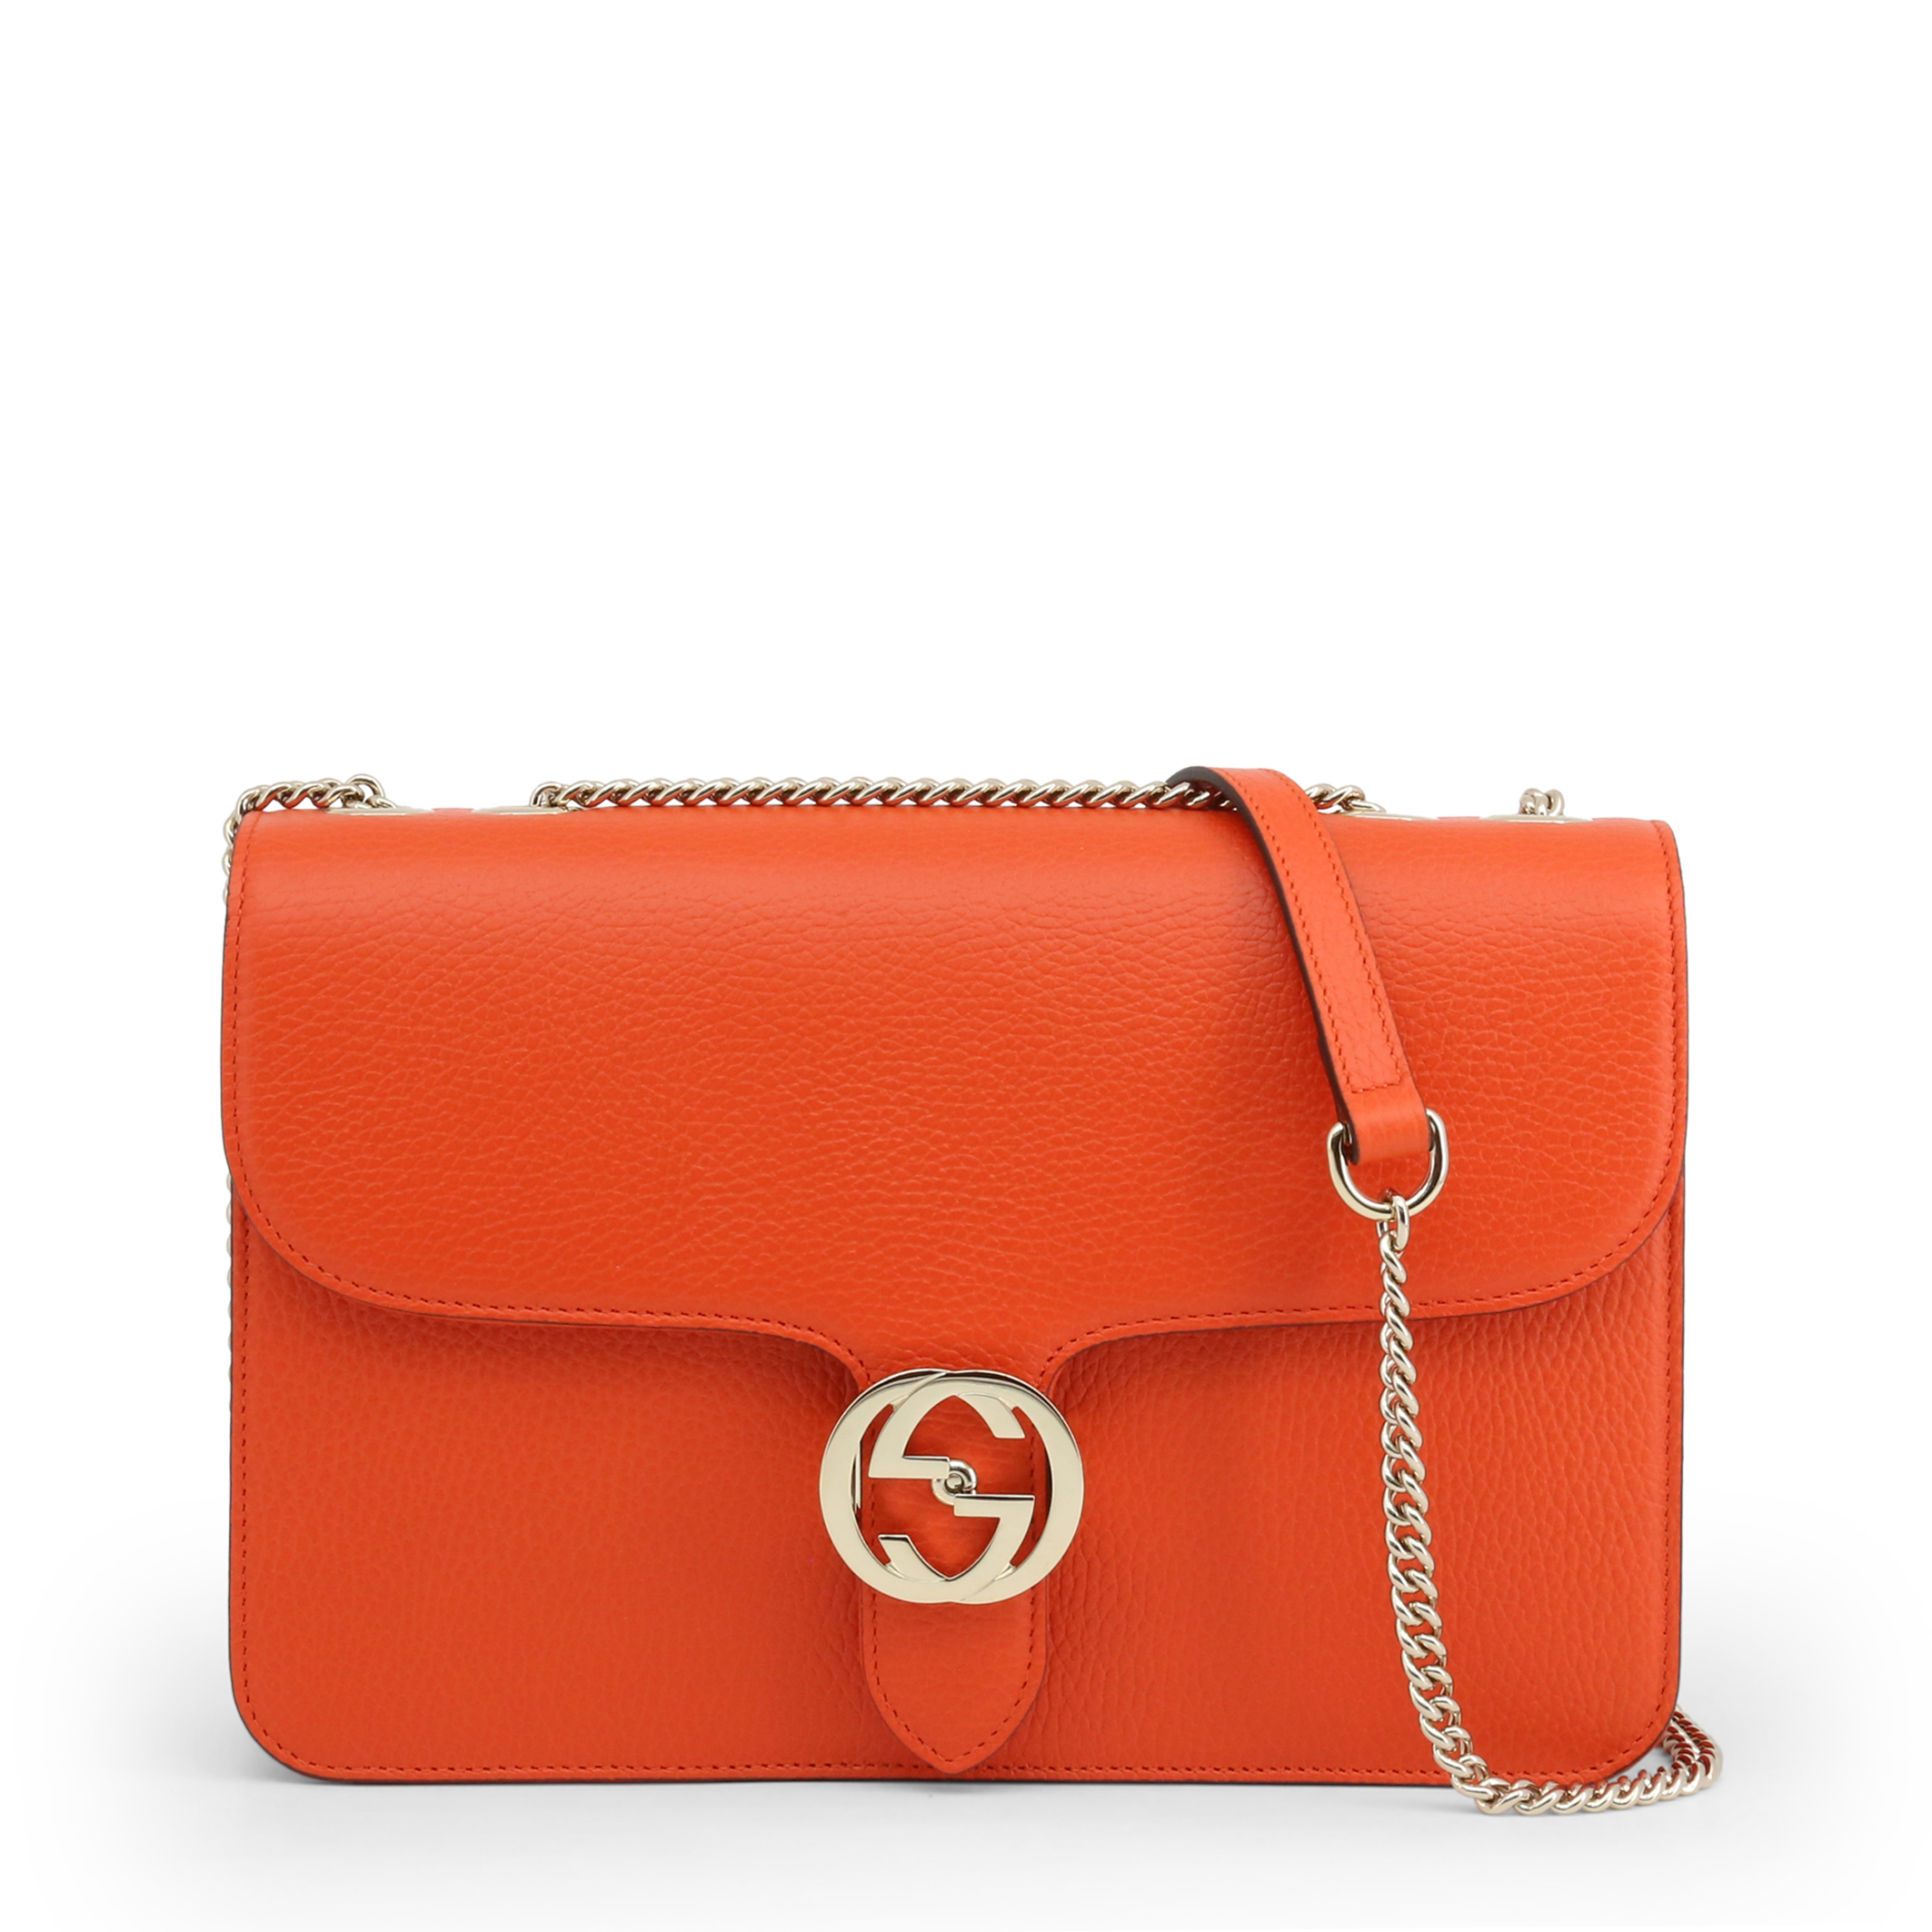 Gucci Womens Crossbody Bags NOSIZE | eBay